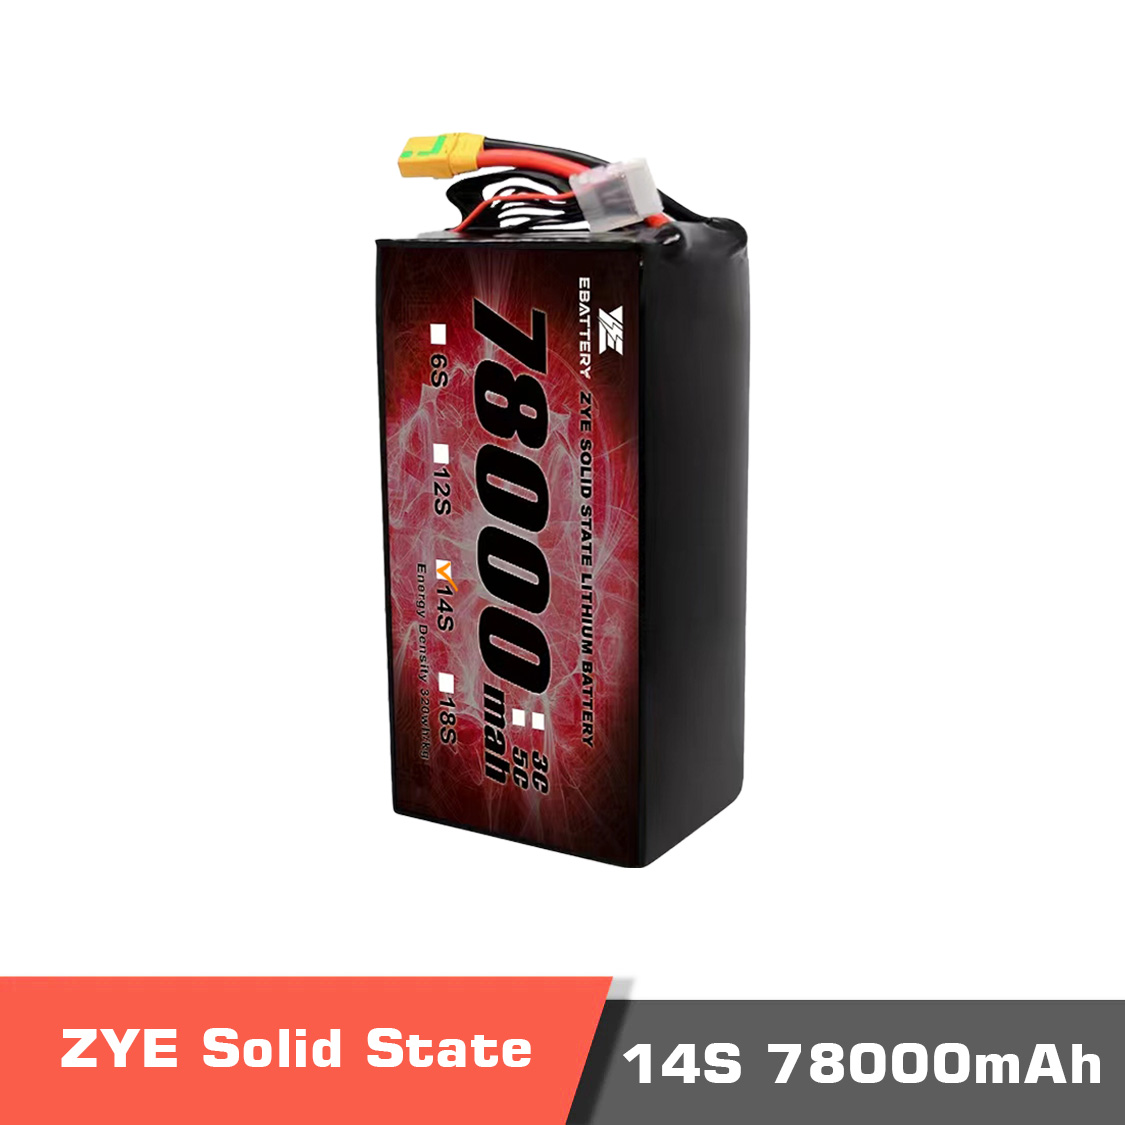 78000 14stemp.2 - ZYE Power Ultra HV Semi Solid-State Battery,Ultra HV Semi Solid-State Battery,6S 78000mAh high voltage LiPo Battery,6S 78000mAh HV LiPo Battery,Solid-state LiPo battery,lipo battery,drone battery,6s battery,high energy density battery,UAV,drone,vtol,ZYE Power,ZYE power Battery - MotioNew - 2